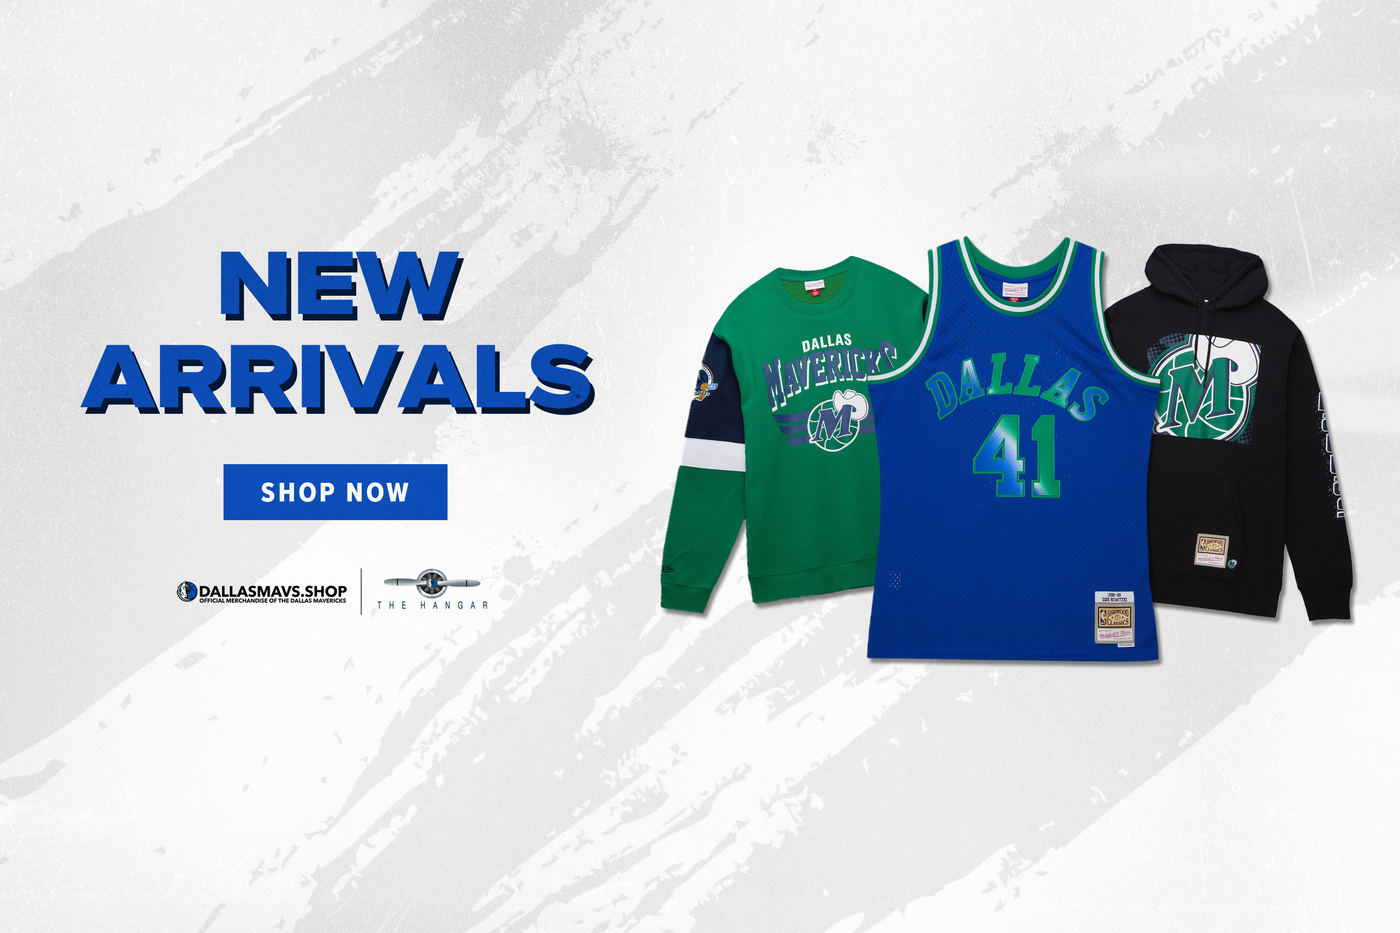 Dallas Mavericks introduce new fan-designed jersey and major merch shop -  CultureMap Dallas